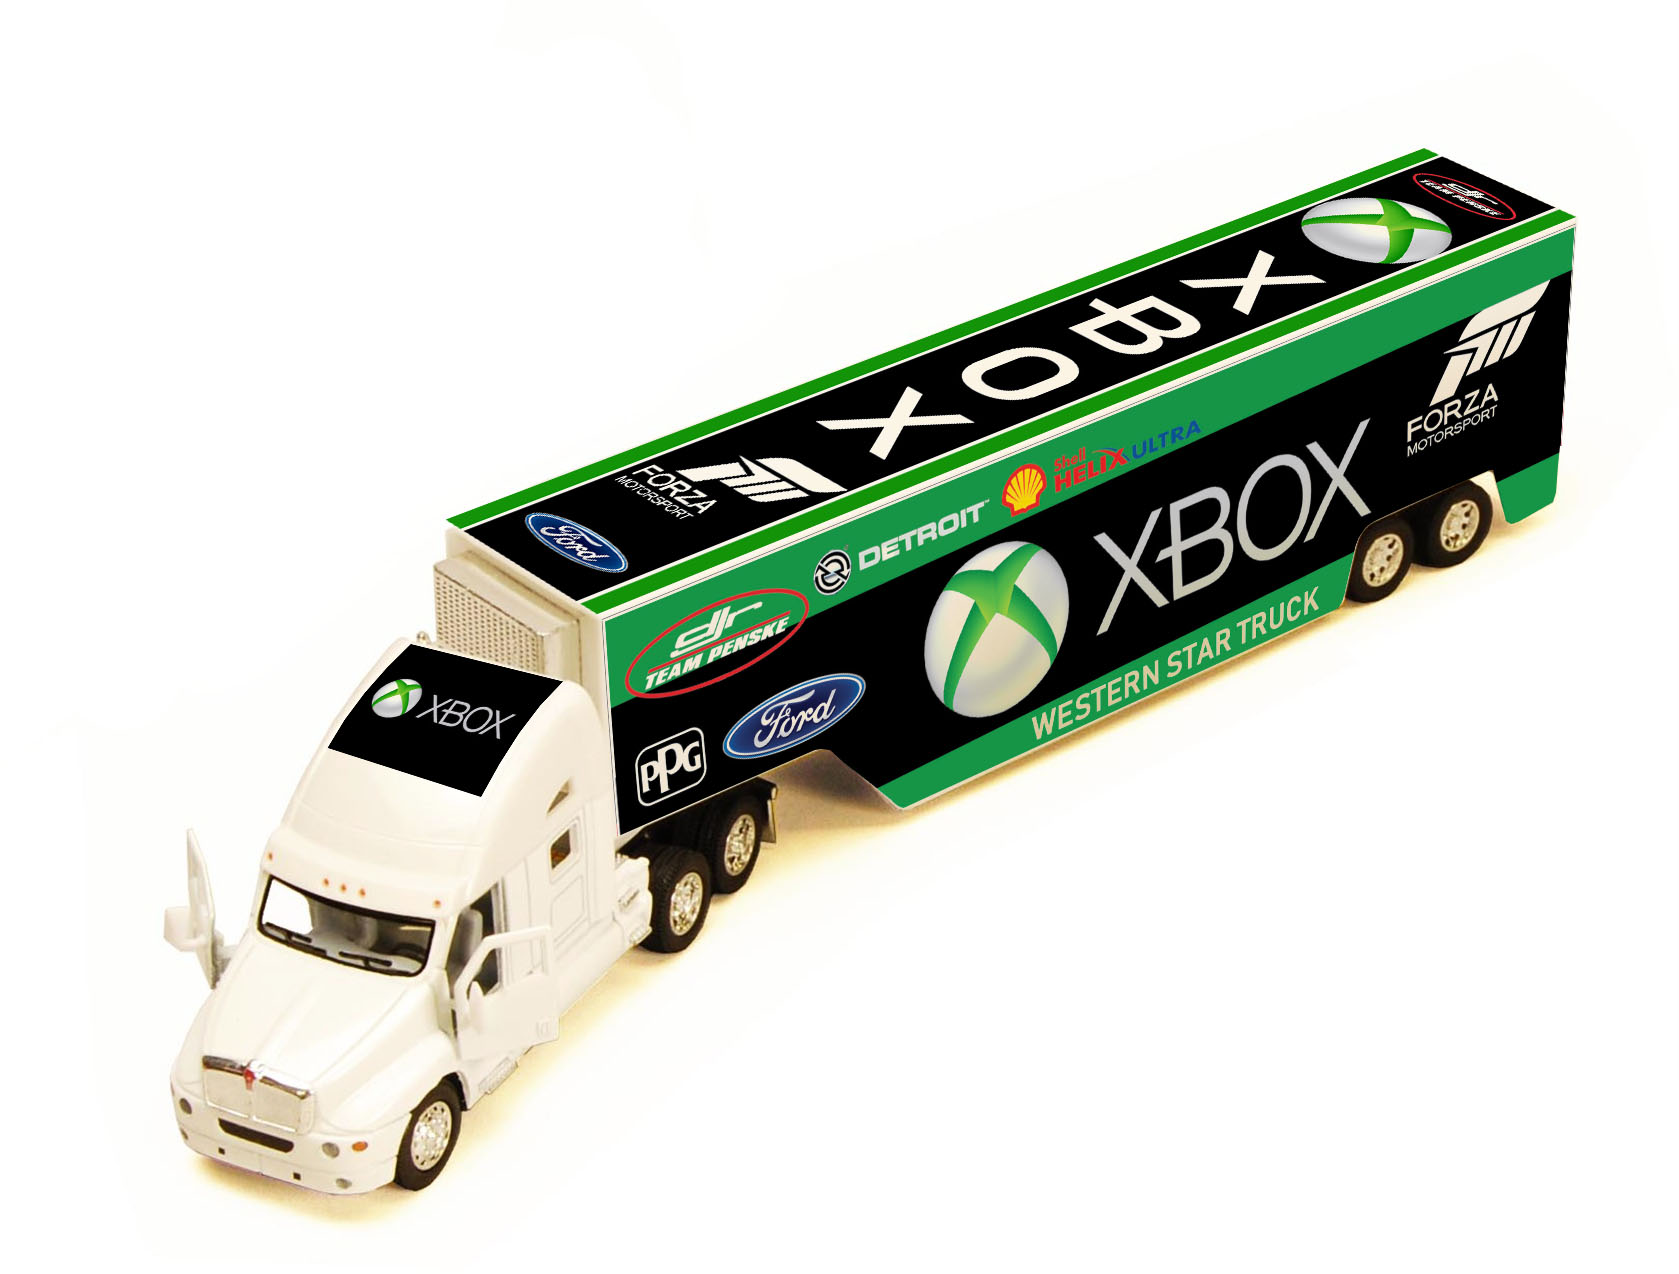 XBOX Racing transporter truck 33cms long